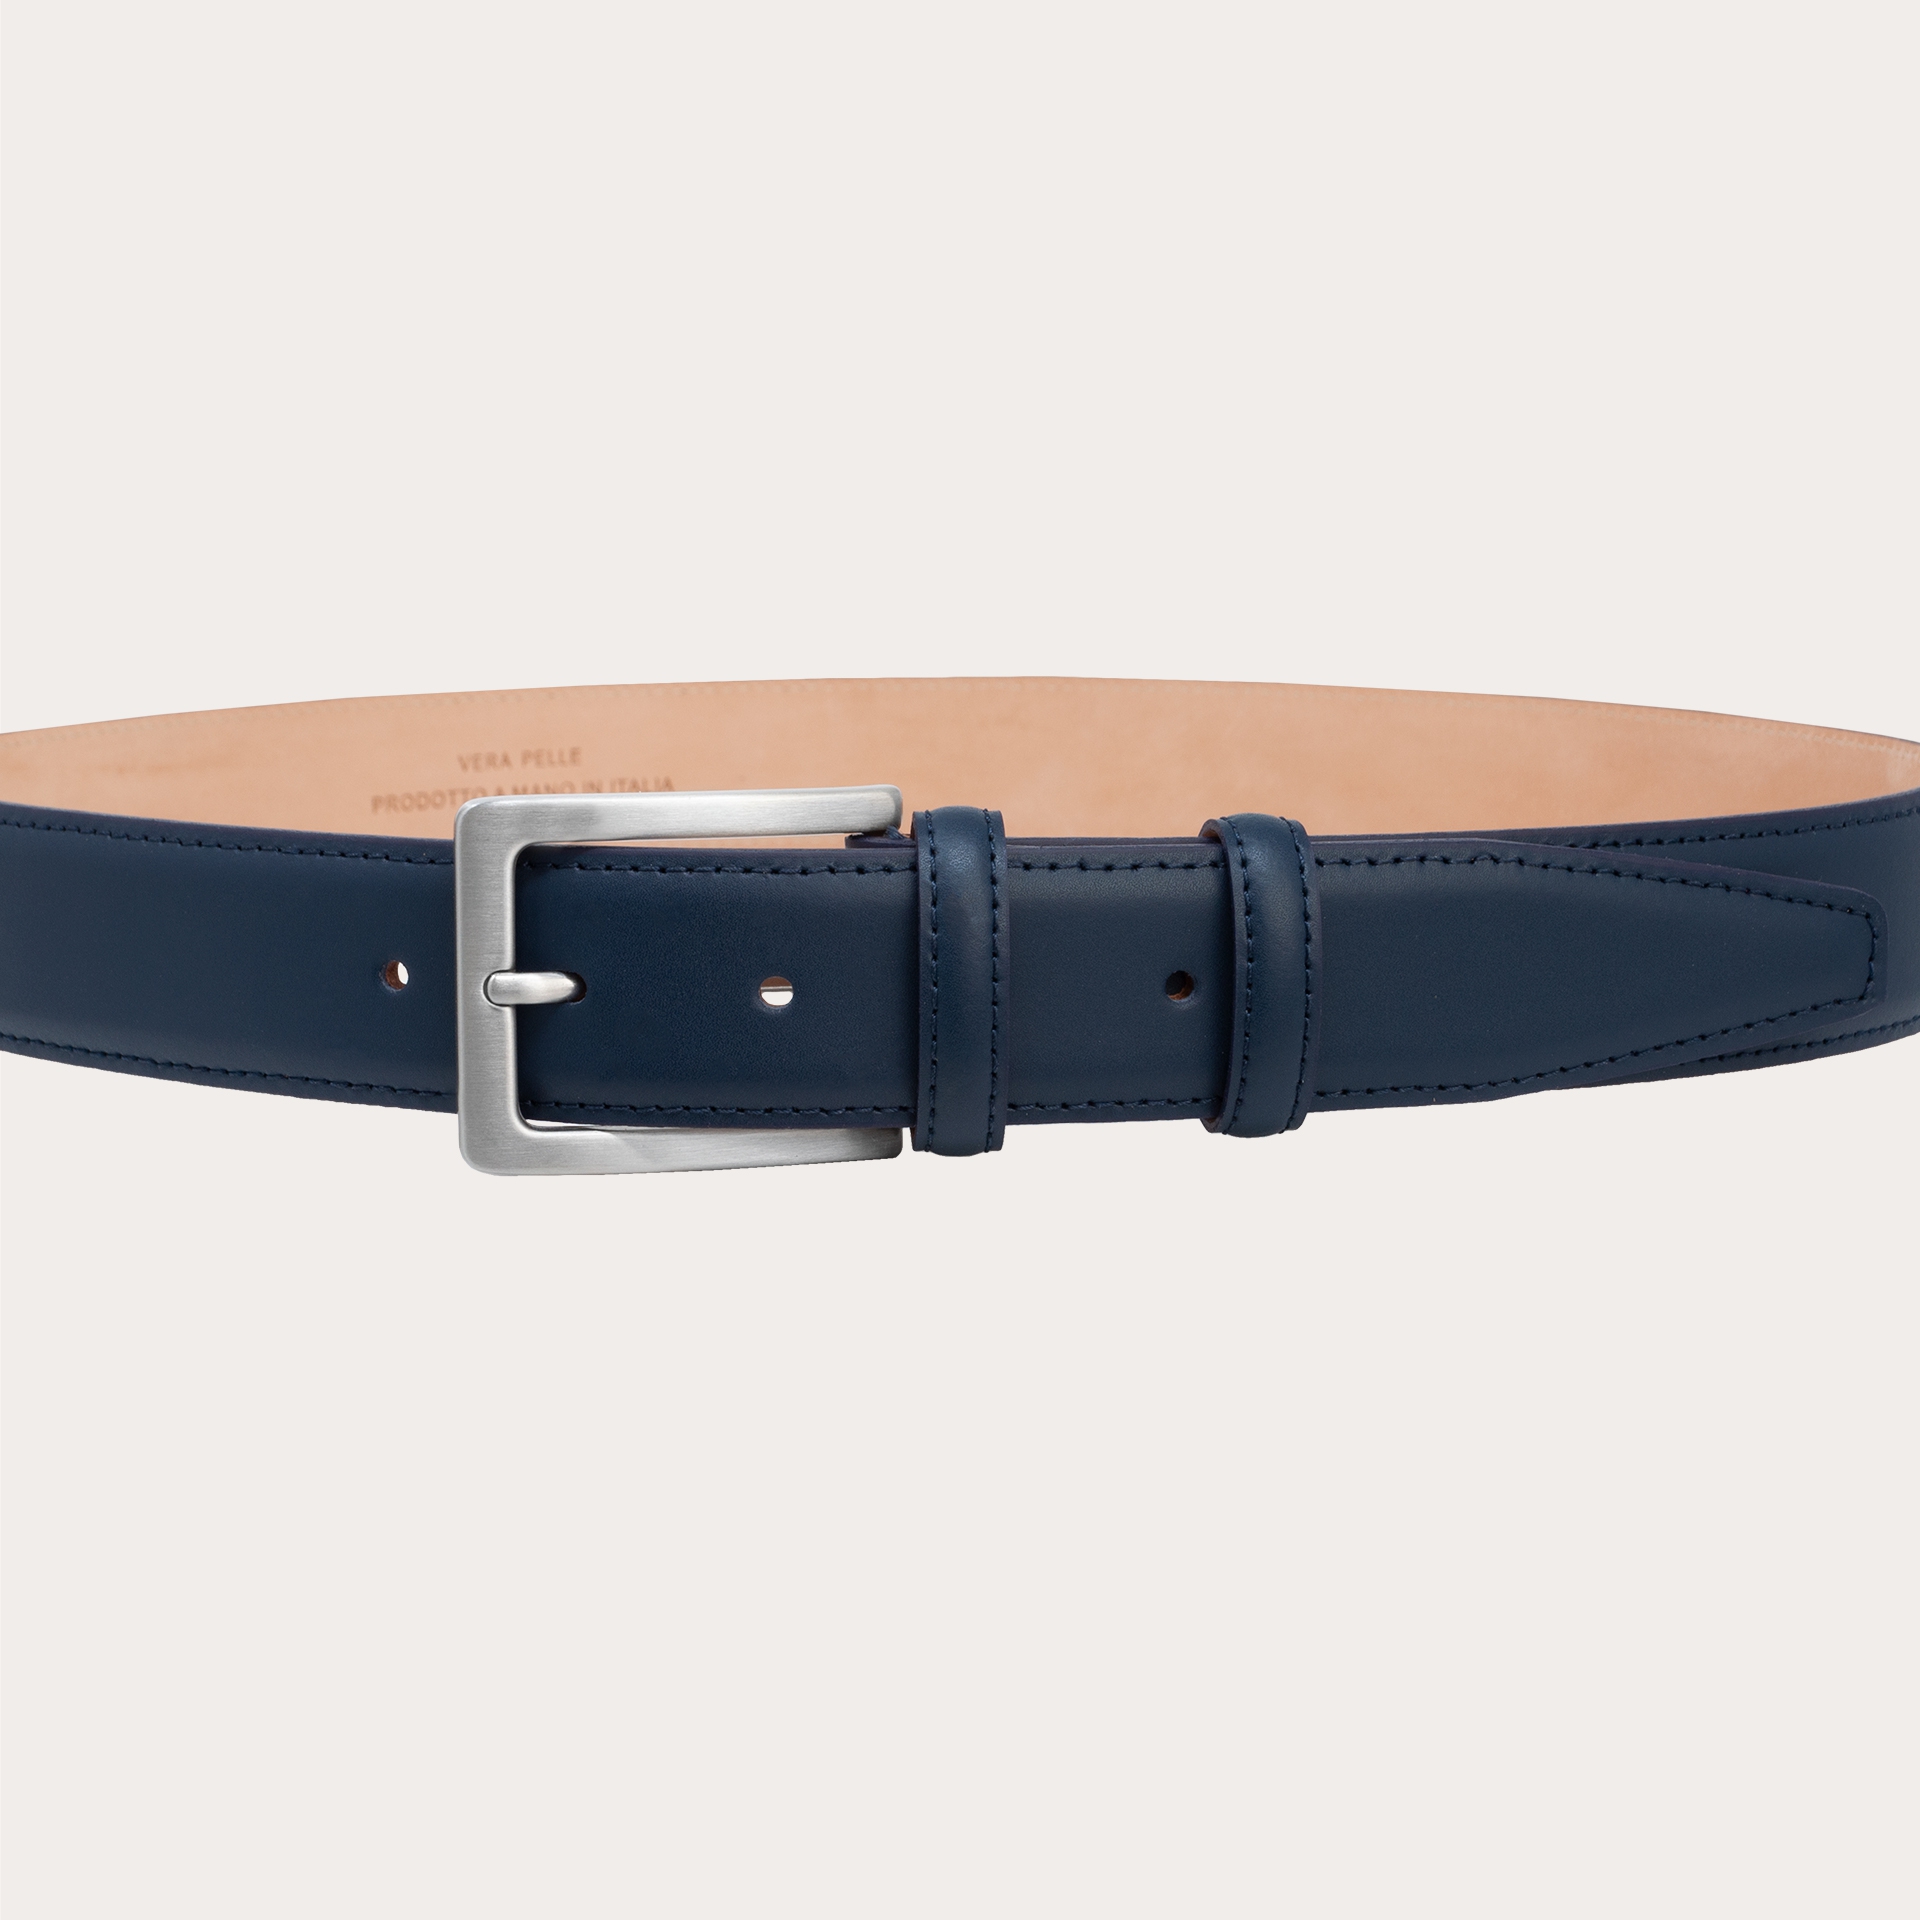 BRUCLE Classic blue belt in genuine leather